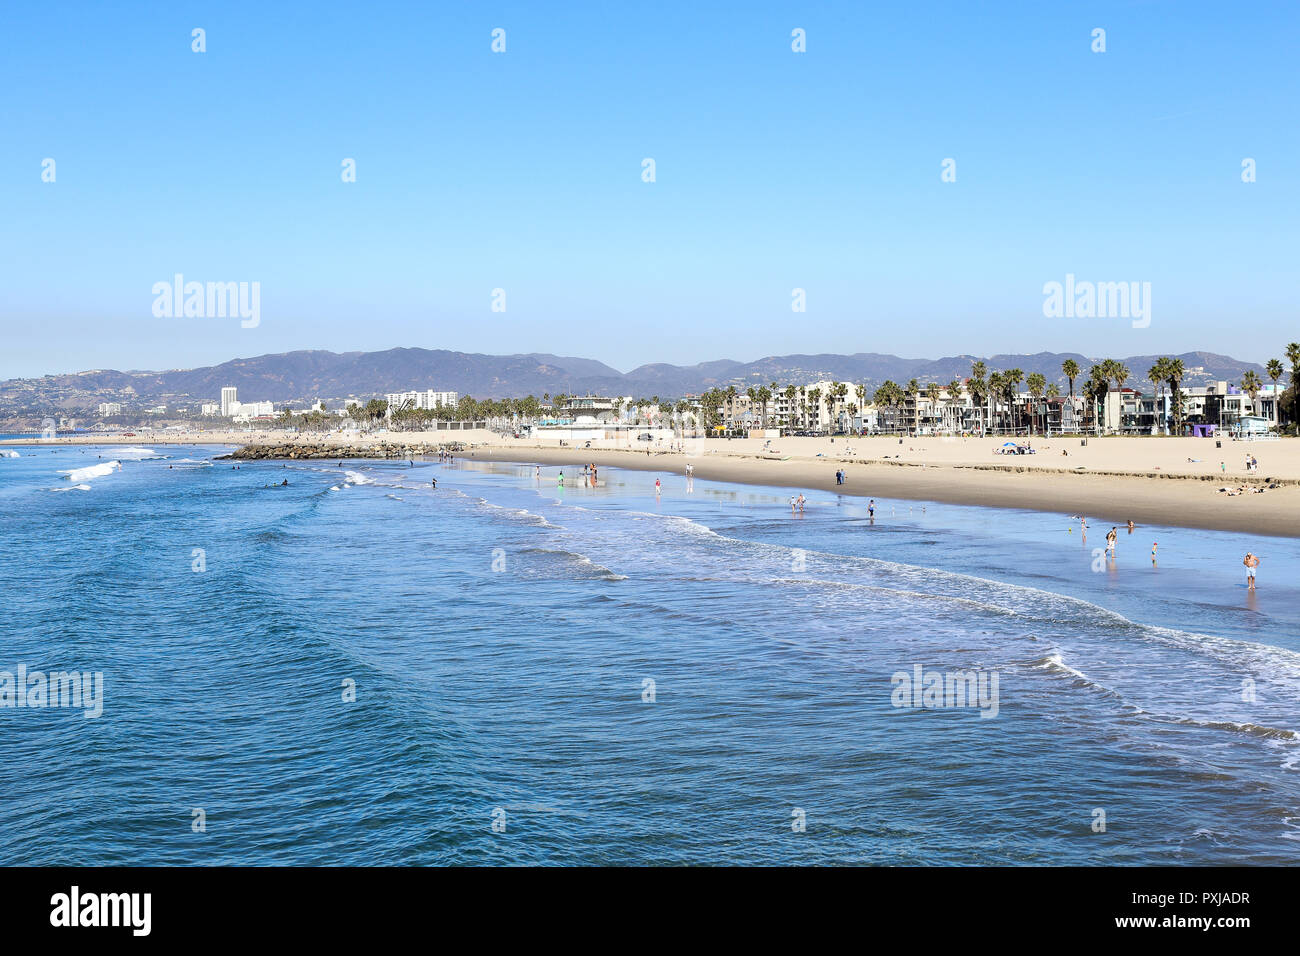 A typical southern California sunny day at Venice beach, California Stock Photo